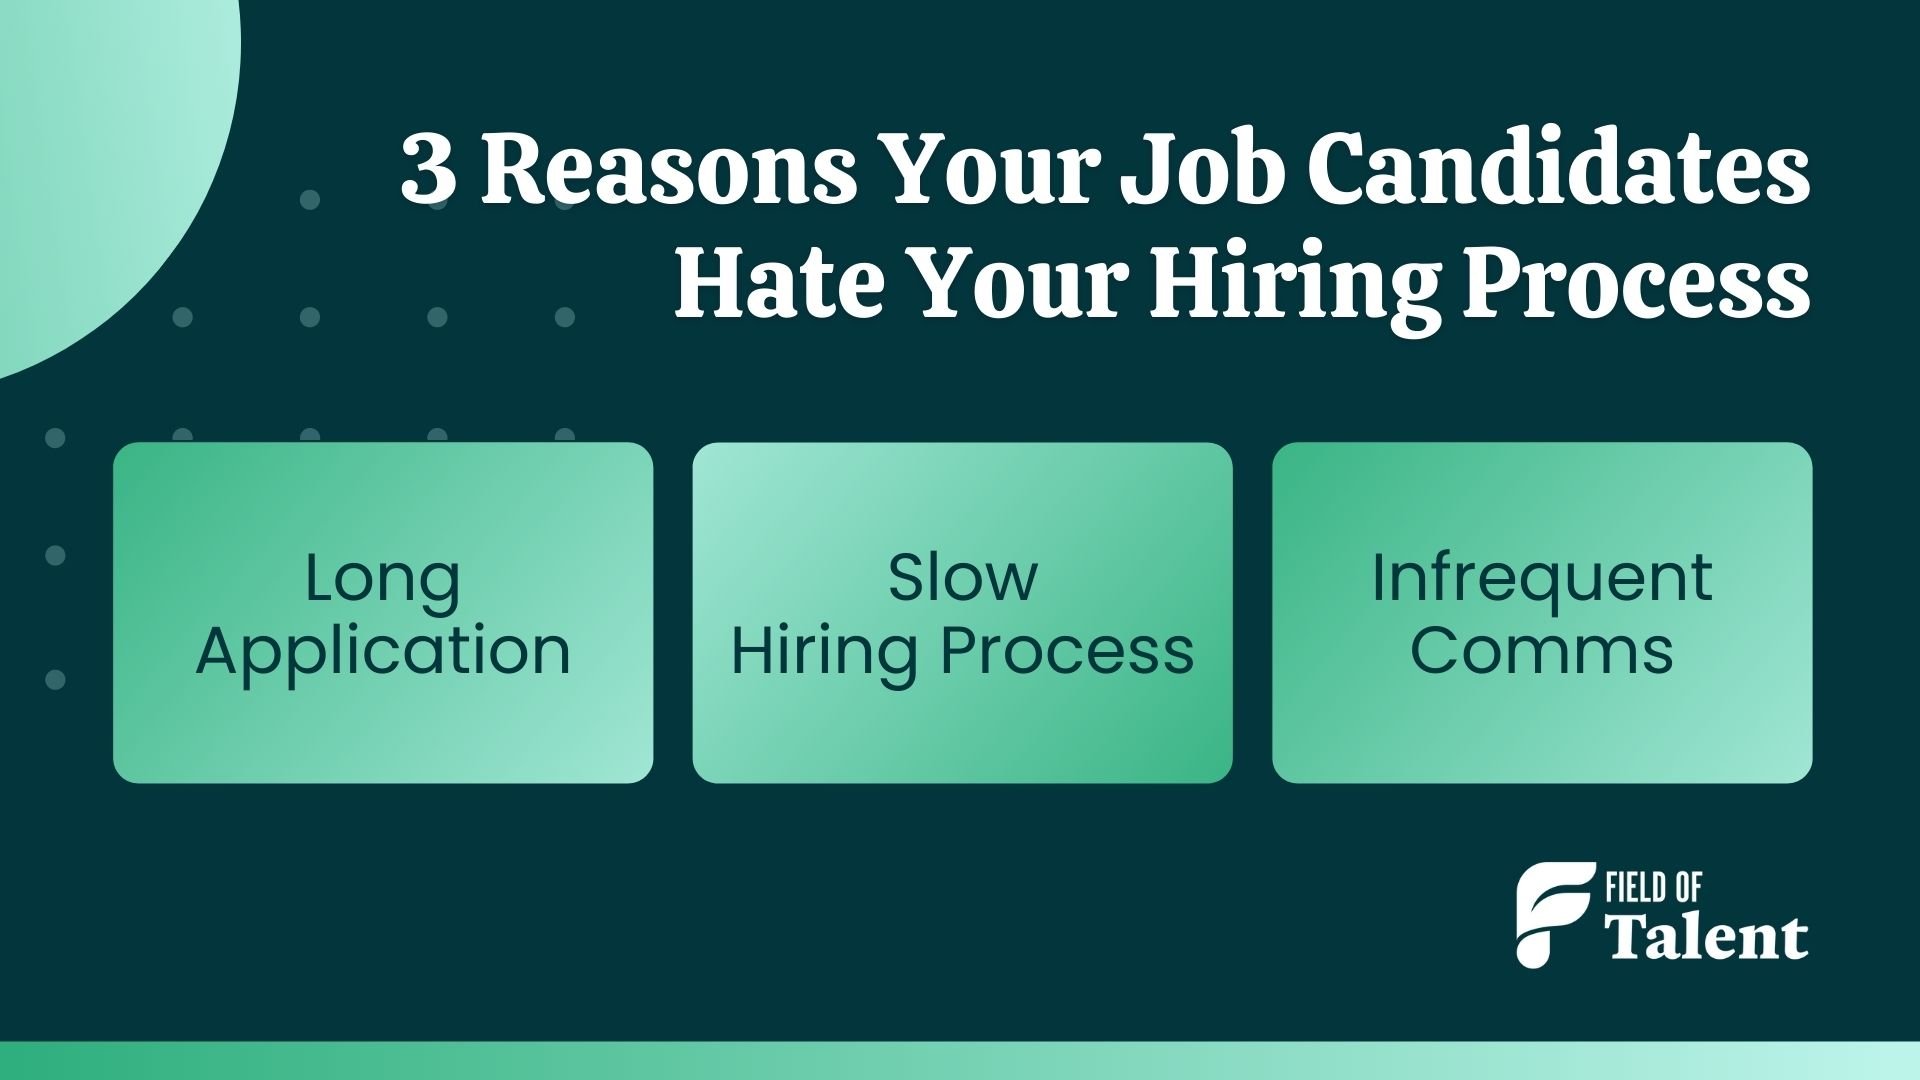 3 reasons job candidates hate hiring process